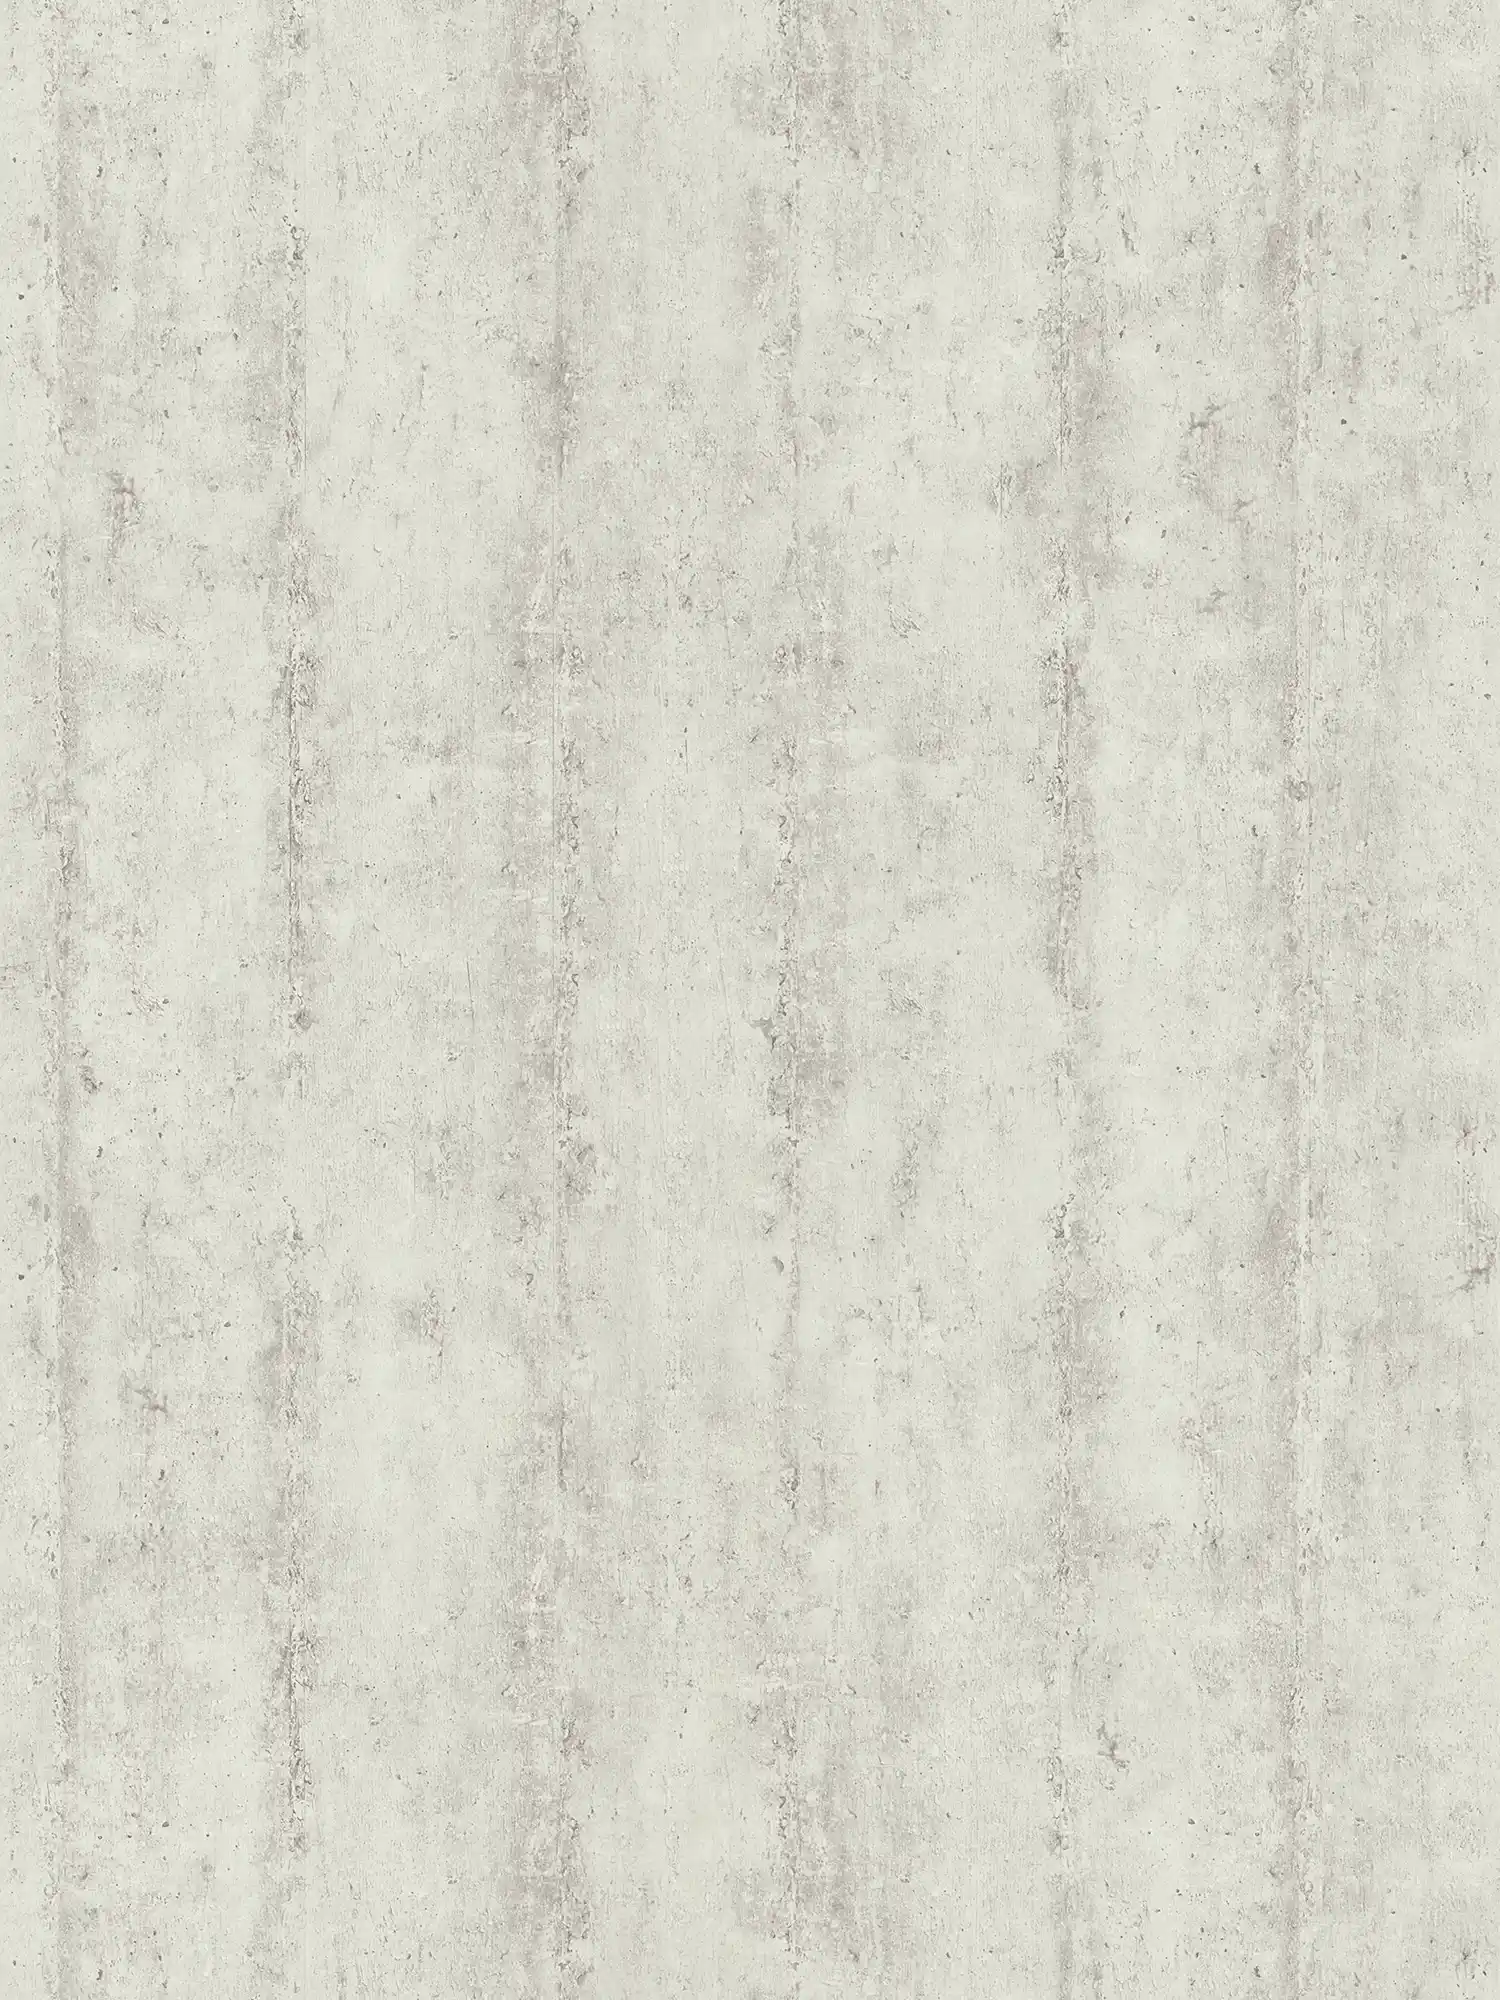 Non-woven wallpaper with concrete look stripe pattern - beige, grey
